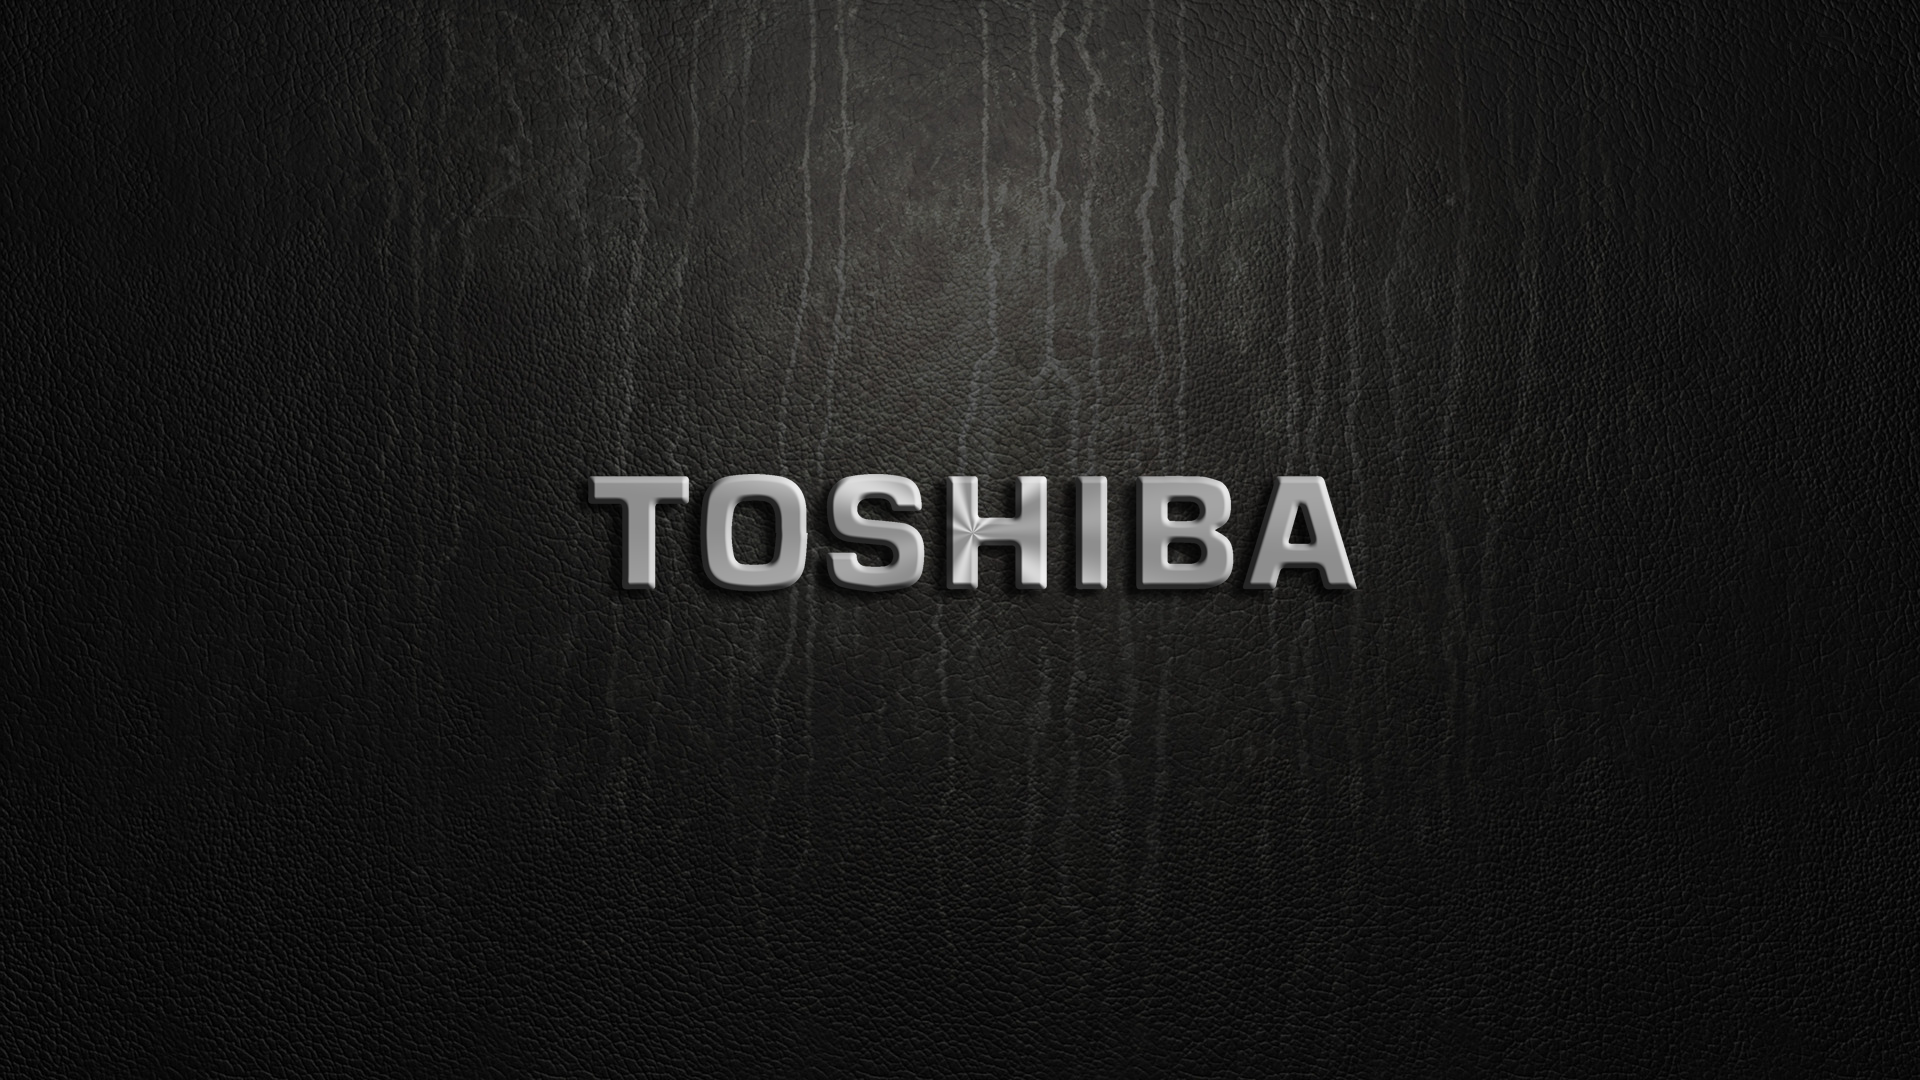 Toshiba Wallpaper  Toshiba  Free Download Borrow and Streaming   Internet Archive